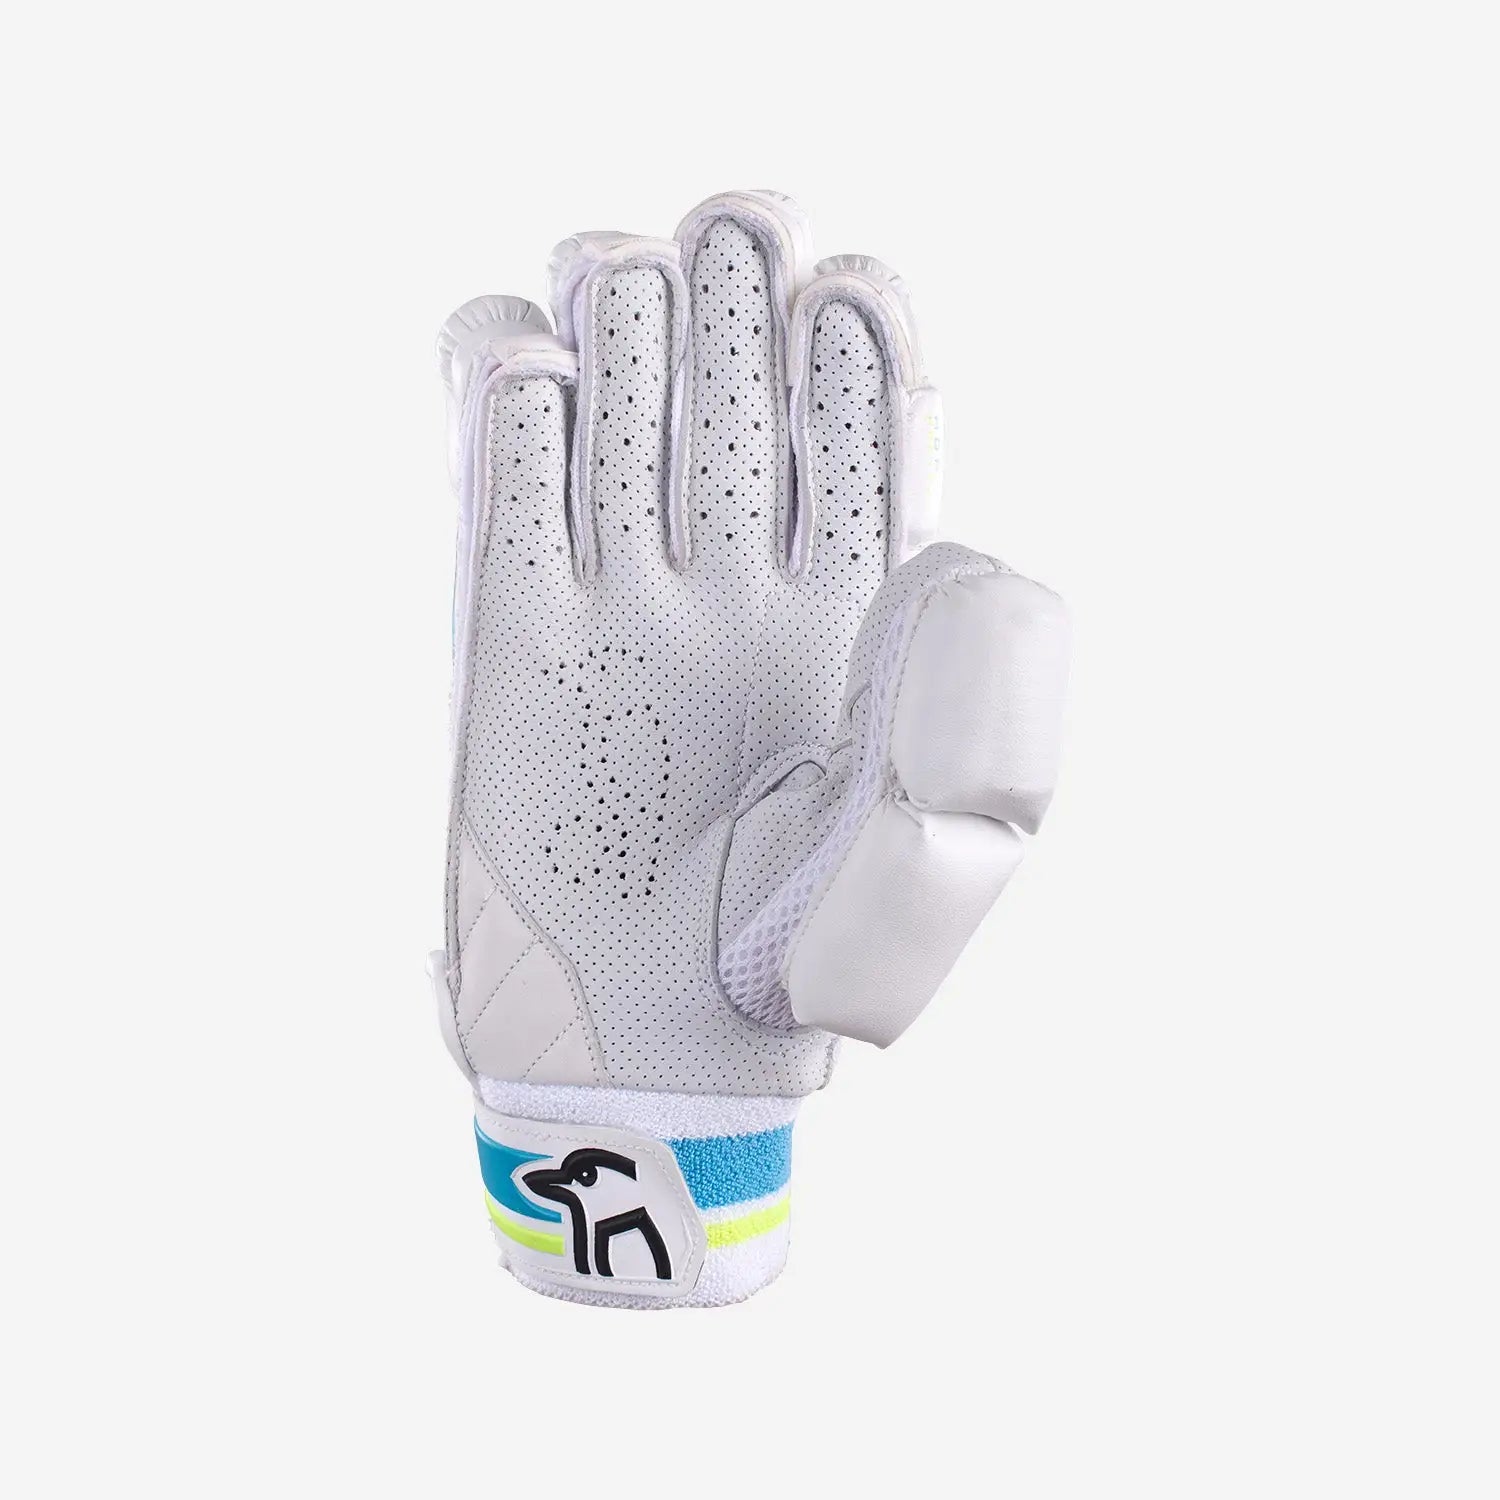 Kookaburra RAPID 2.1 Cricket Batting Gloves Comfort and Protection - Adult RH - GLOVE - BATTING